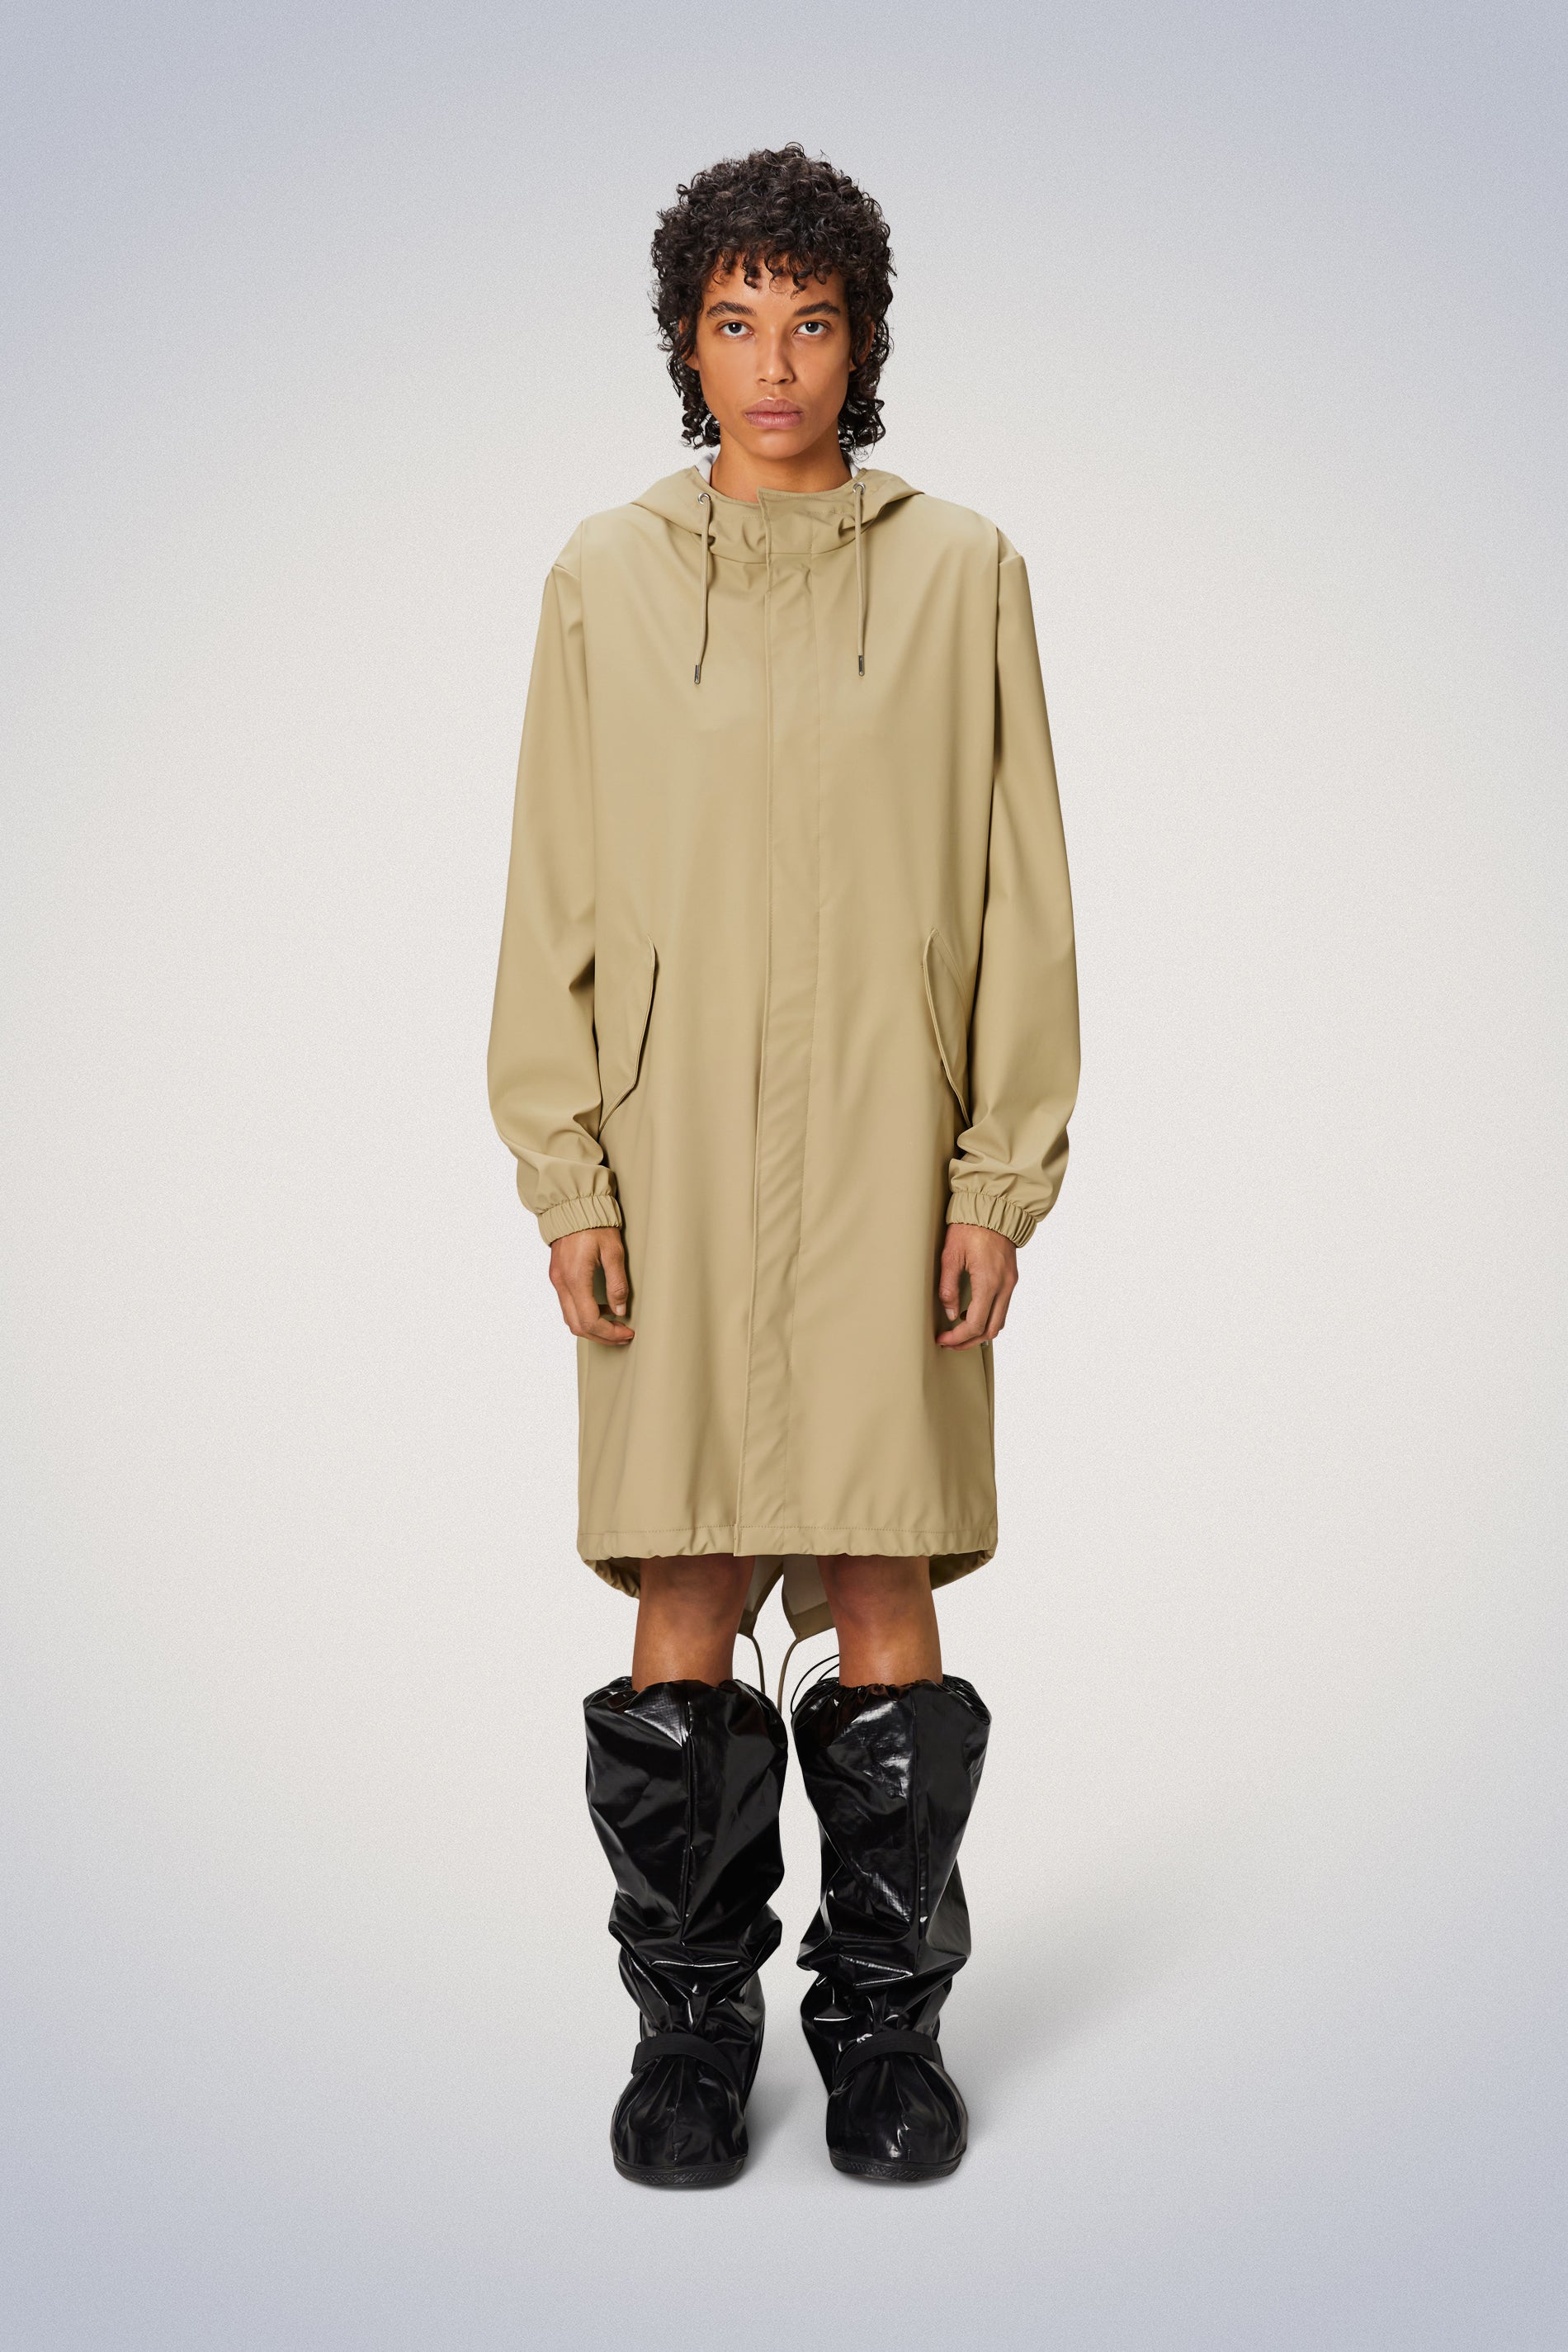 Raingear for Women | Buy Rainwear & Outfits for Women | Rains®